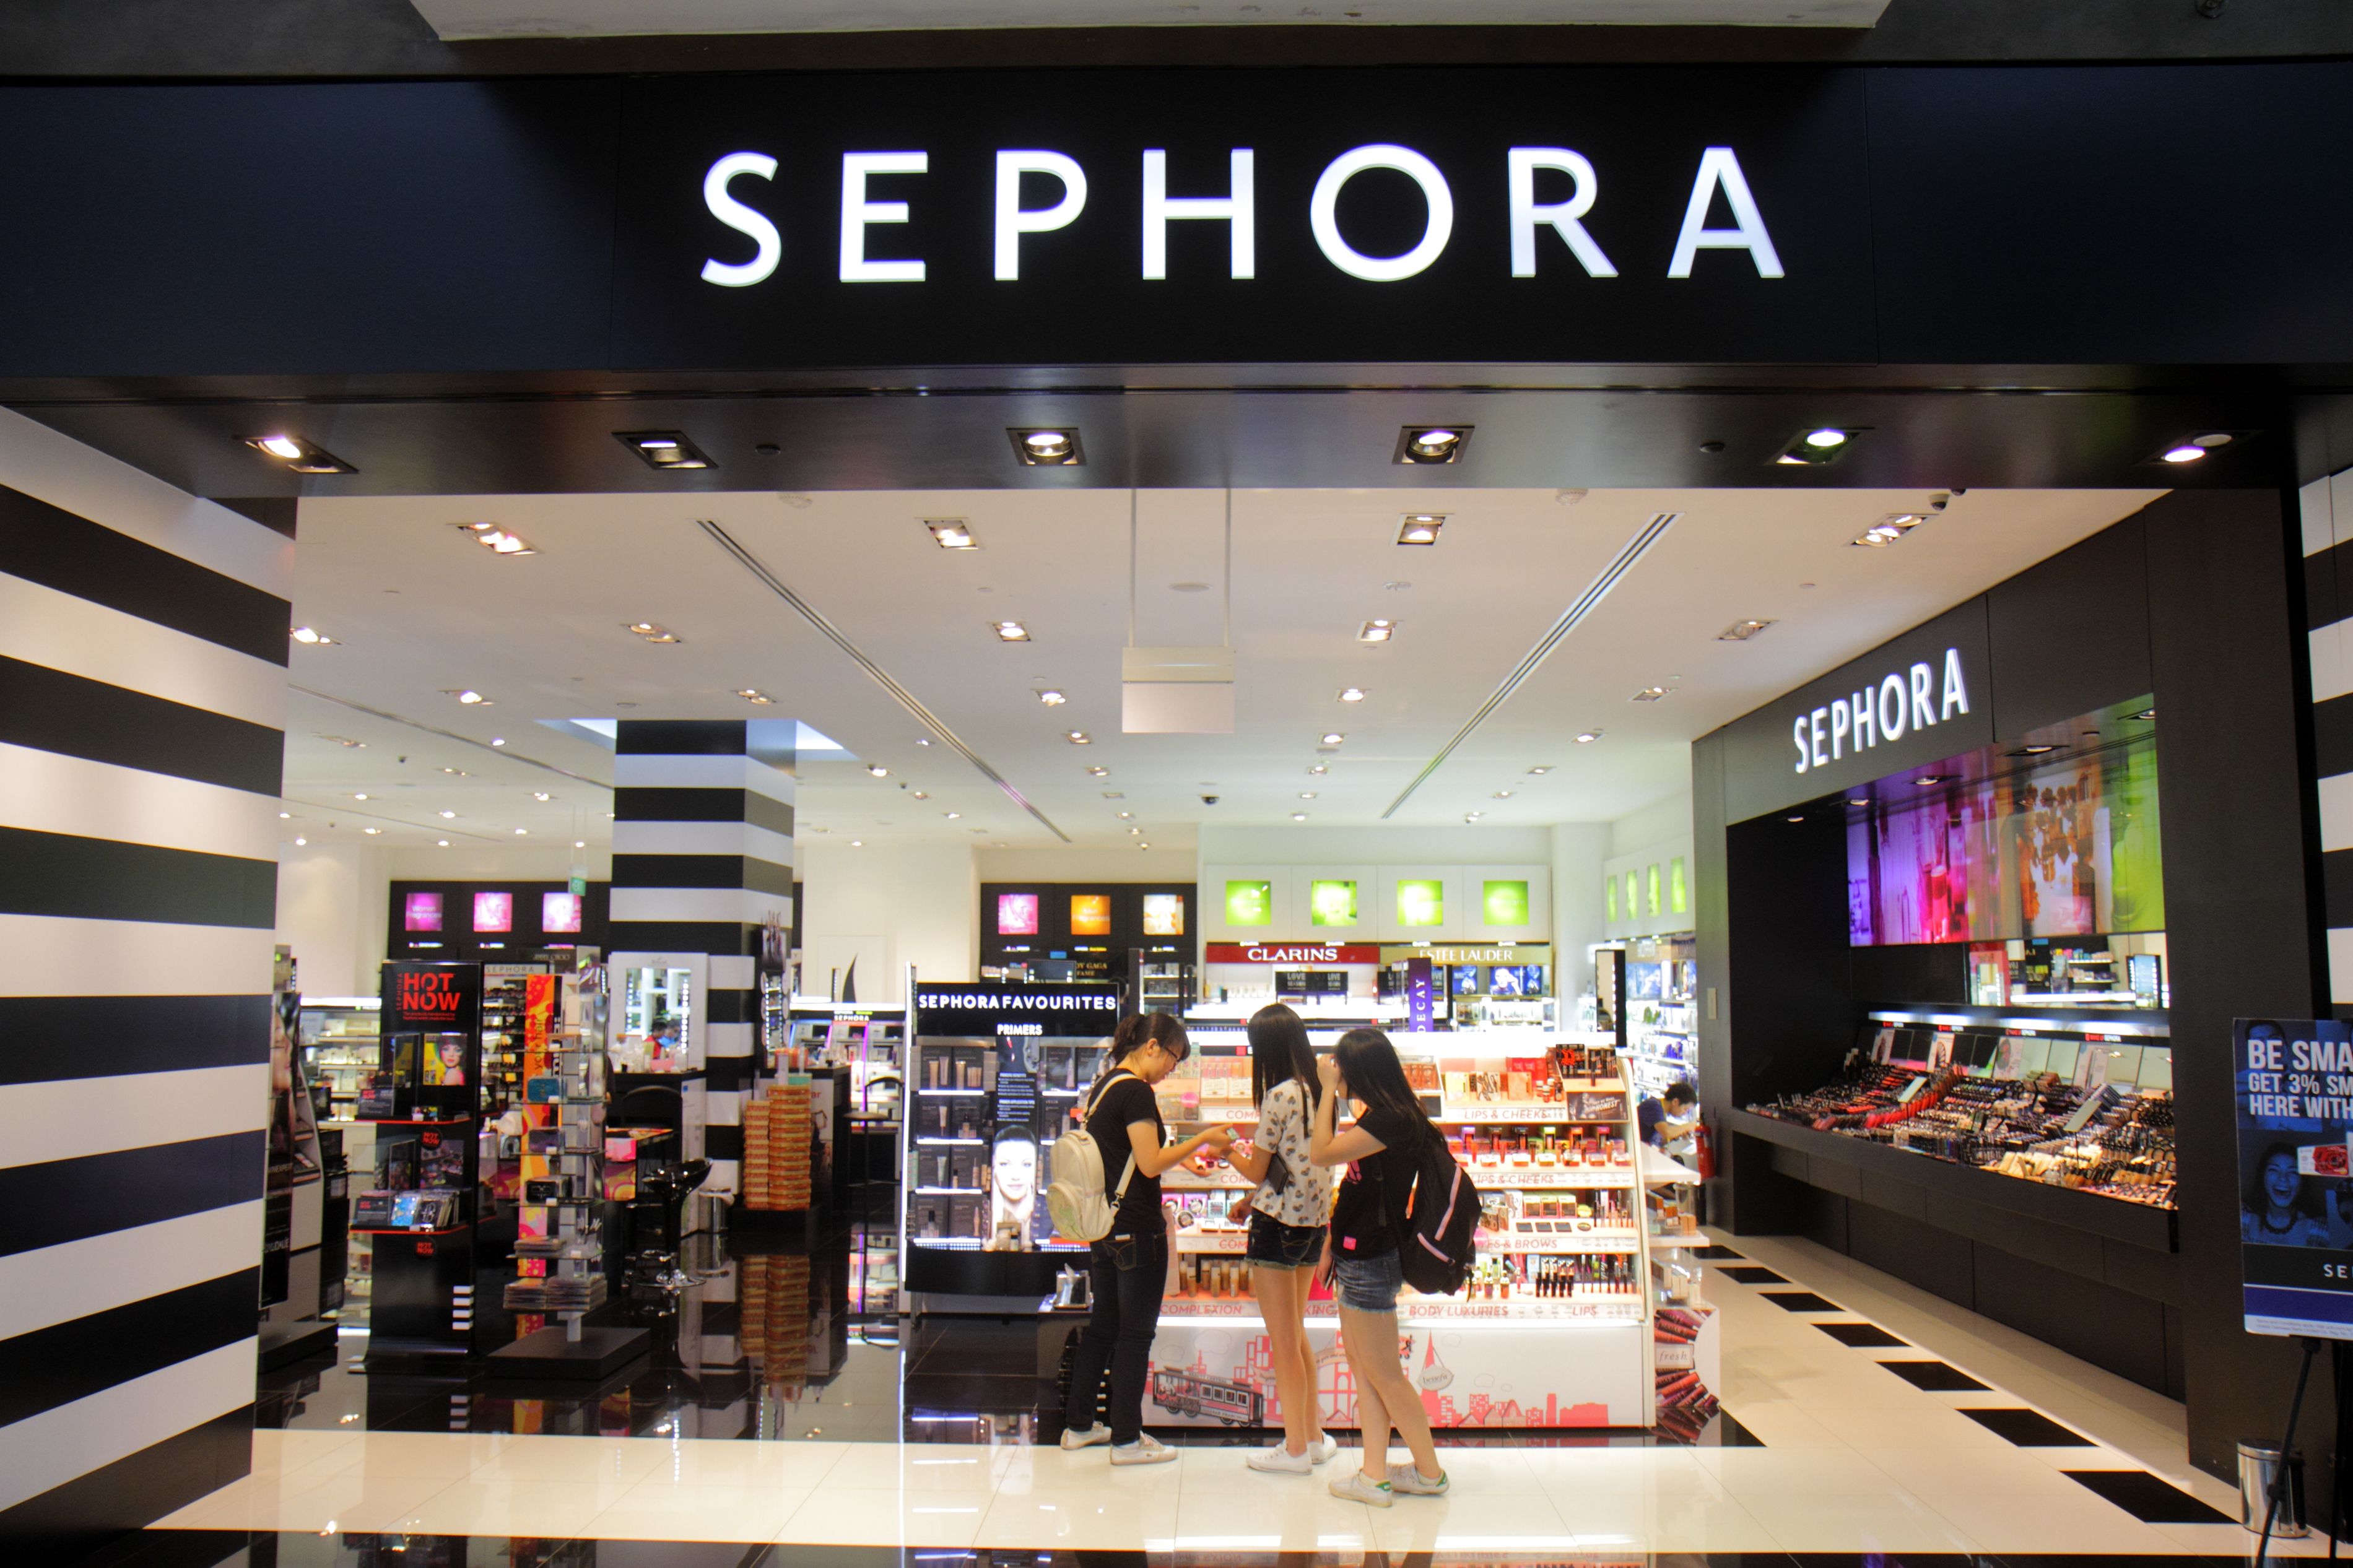 Sephora closes US stores for diversity training